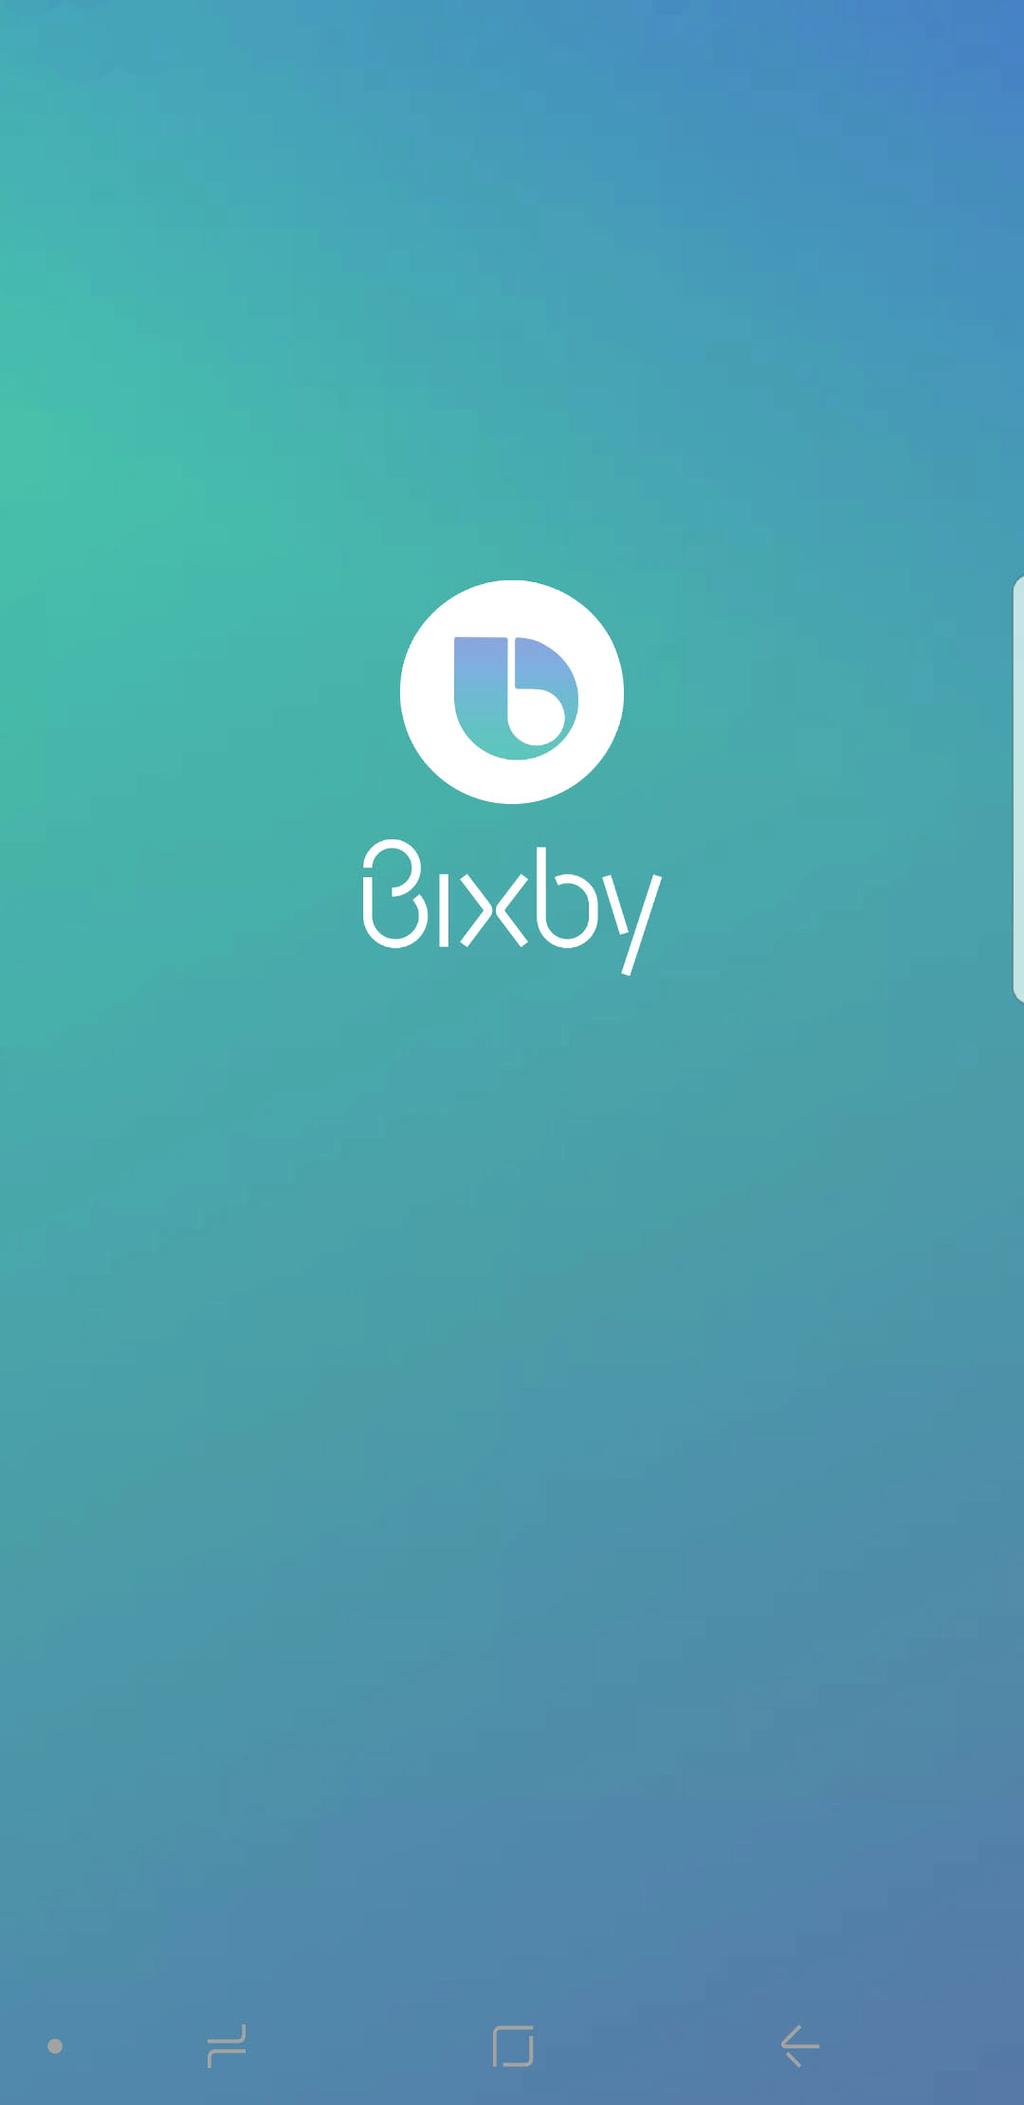 Hello Bixby To launch Hello Bixby, press the Bixby key.